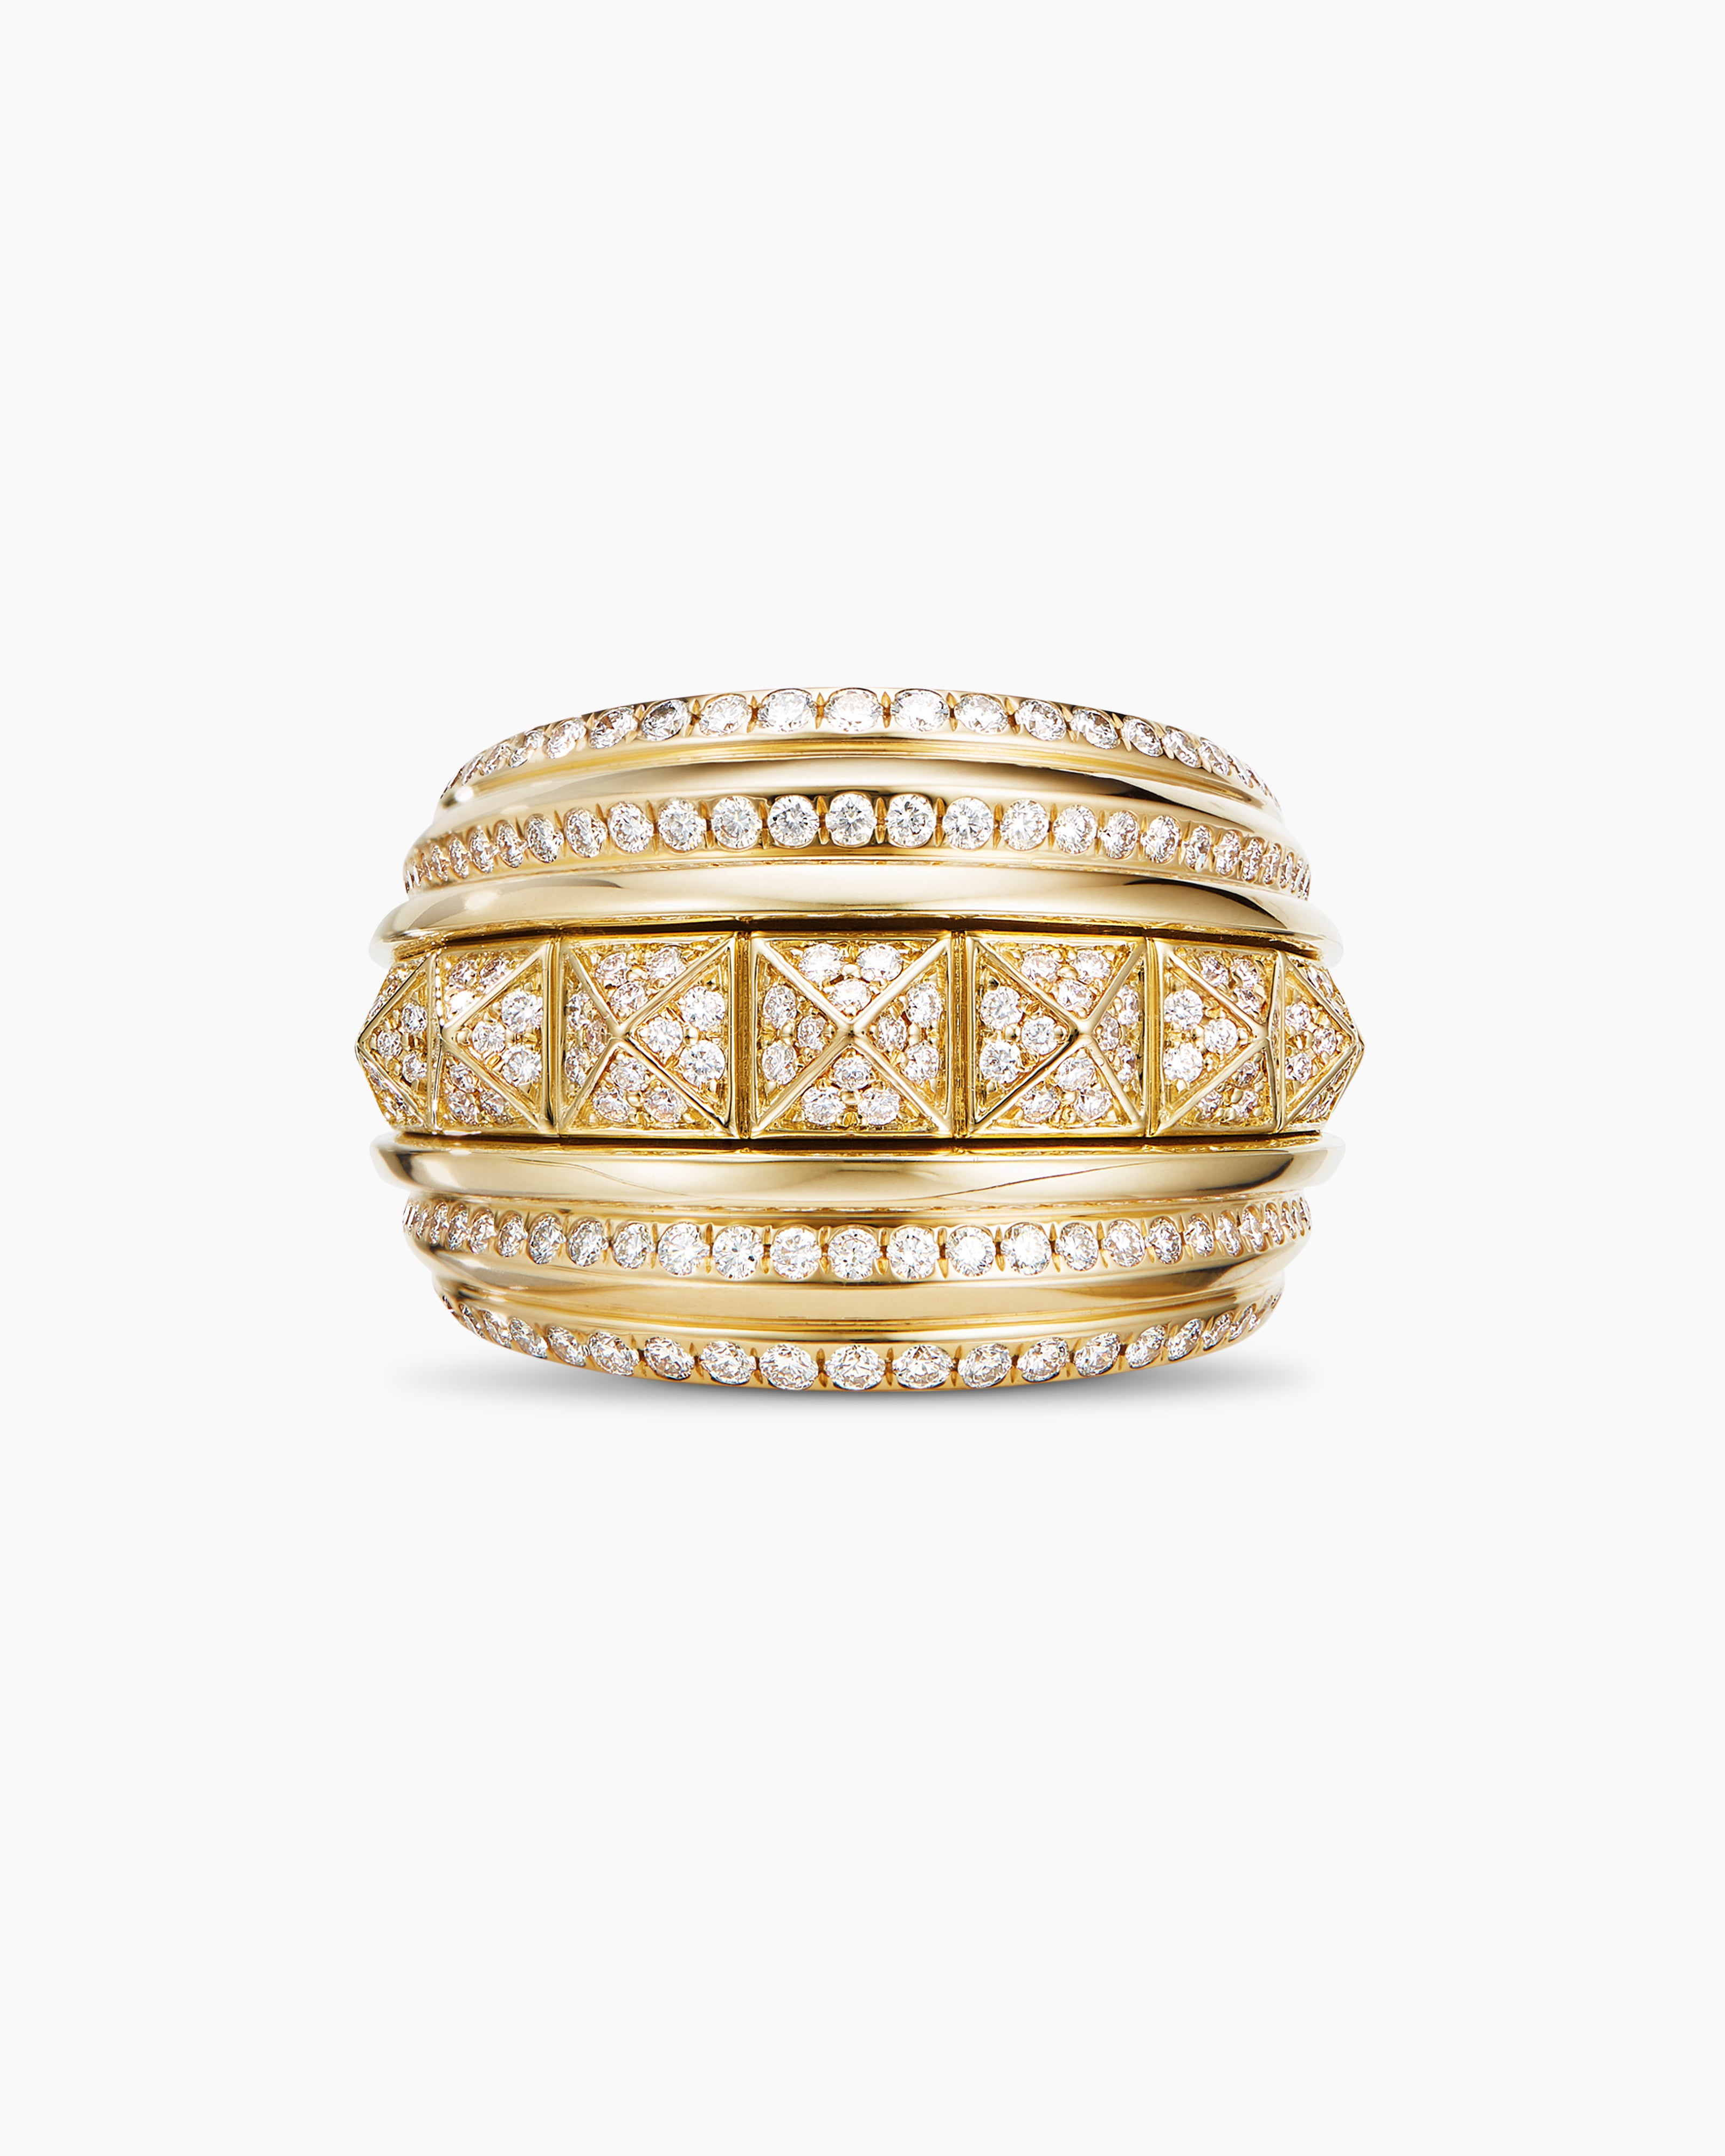 David Yurman 18K Yellow Gold Modern Renaissance Bracelet with Diamonds